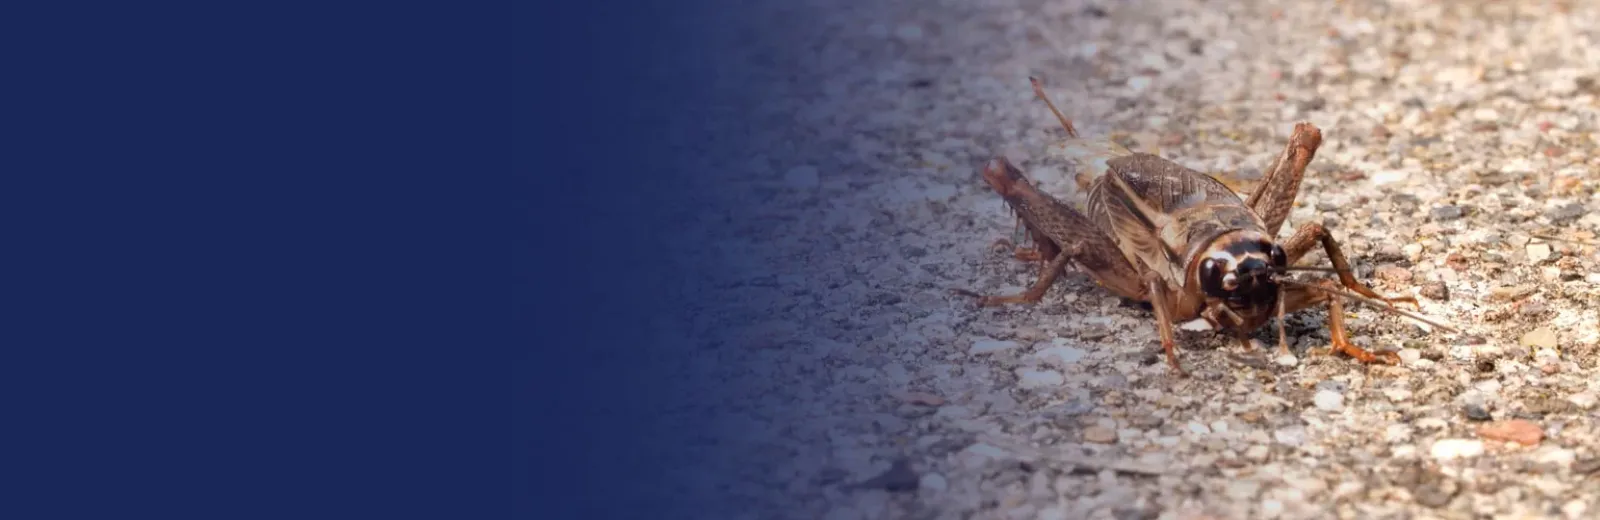 Closeup image of cave cricket